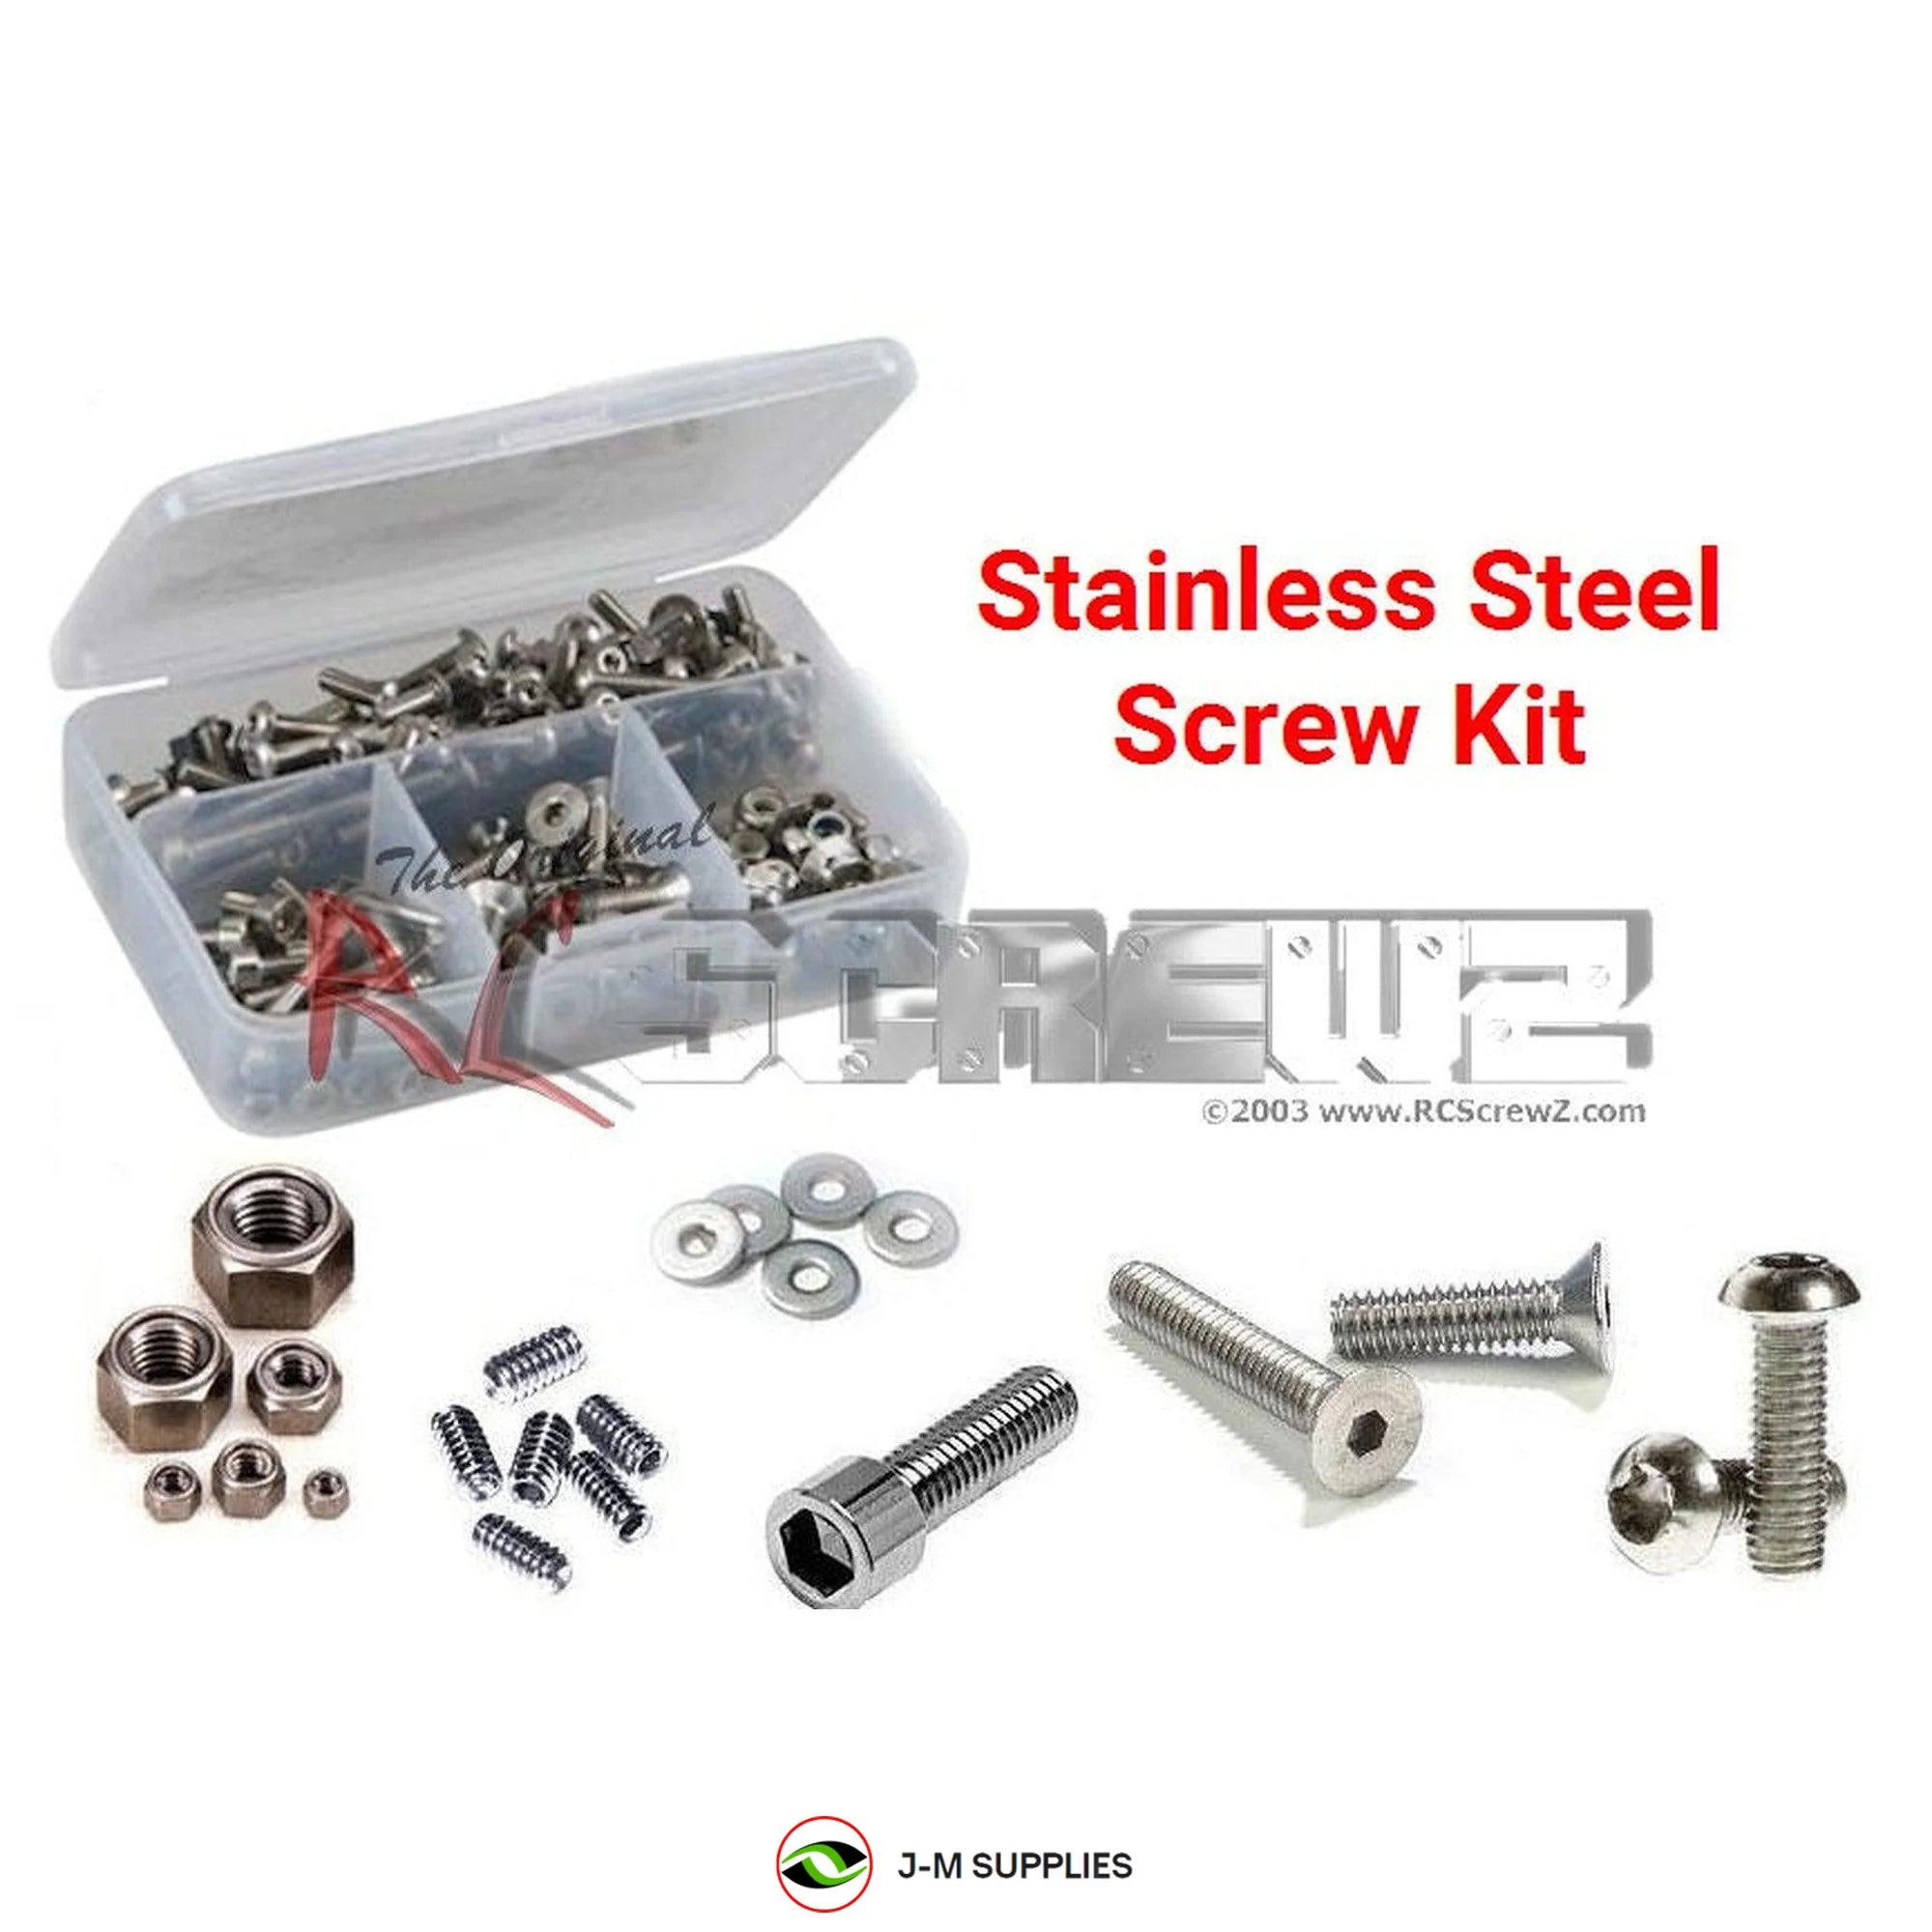 RCScrewZ Stainless Steel Screw Kit xra151 for Team XRAY X1 2020 #370705 - Picture 1 of 12